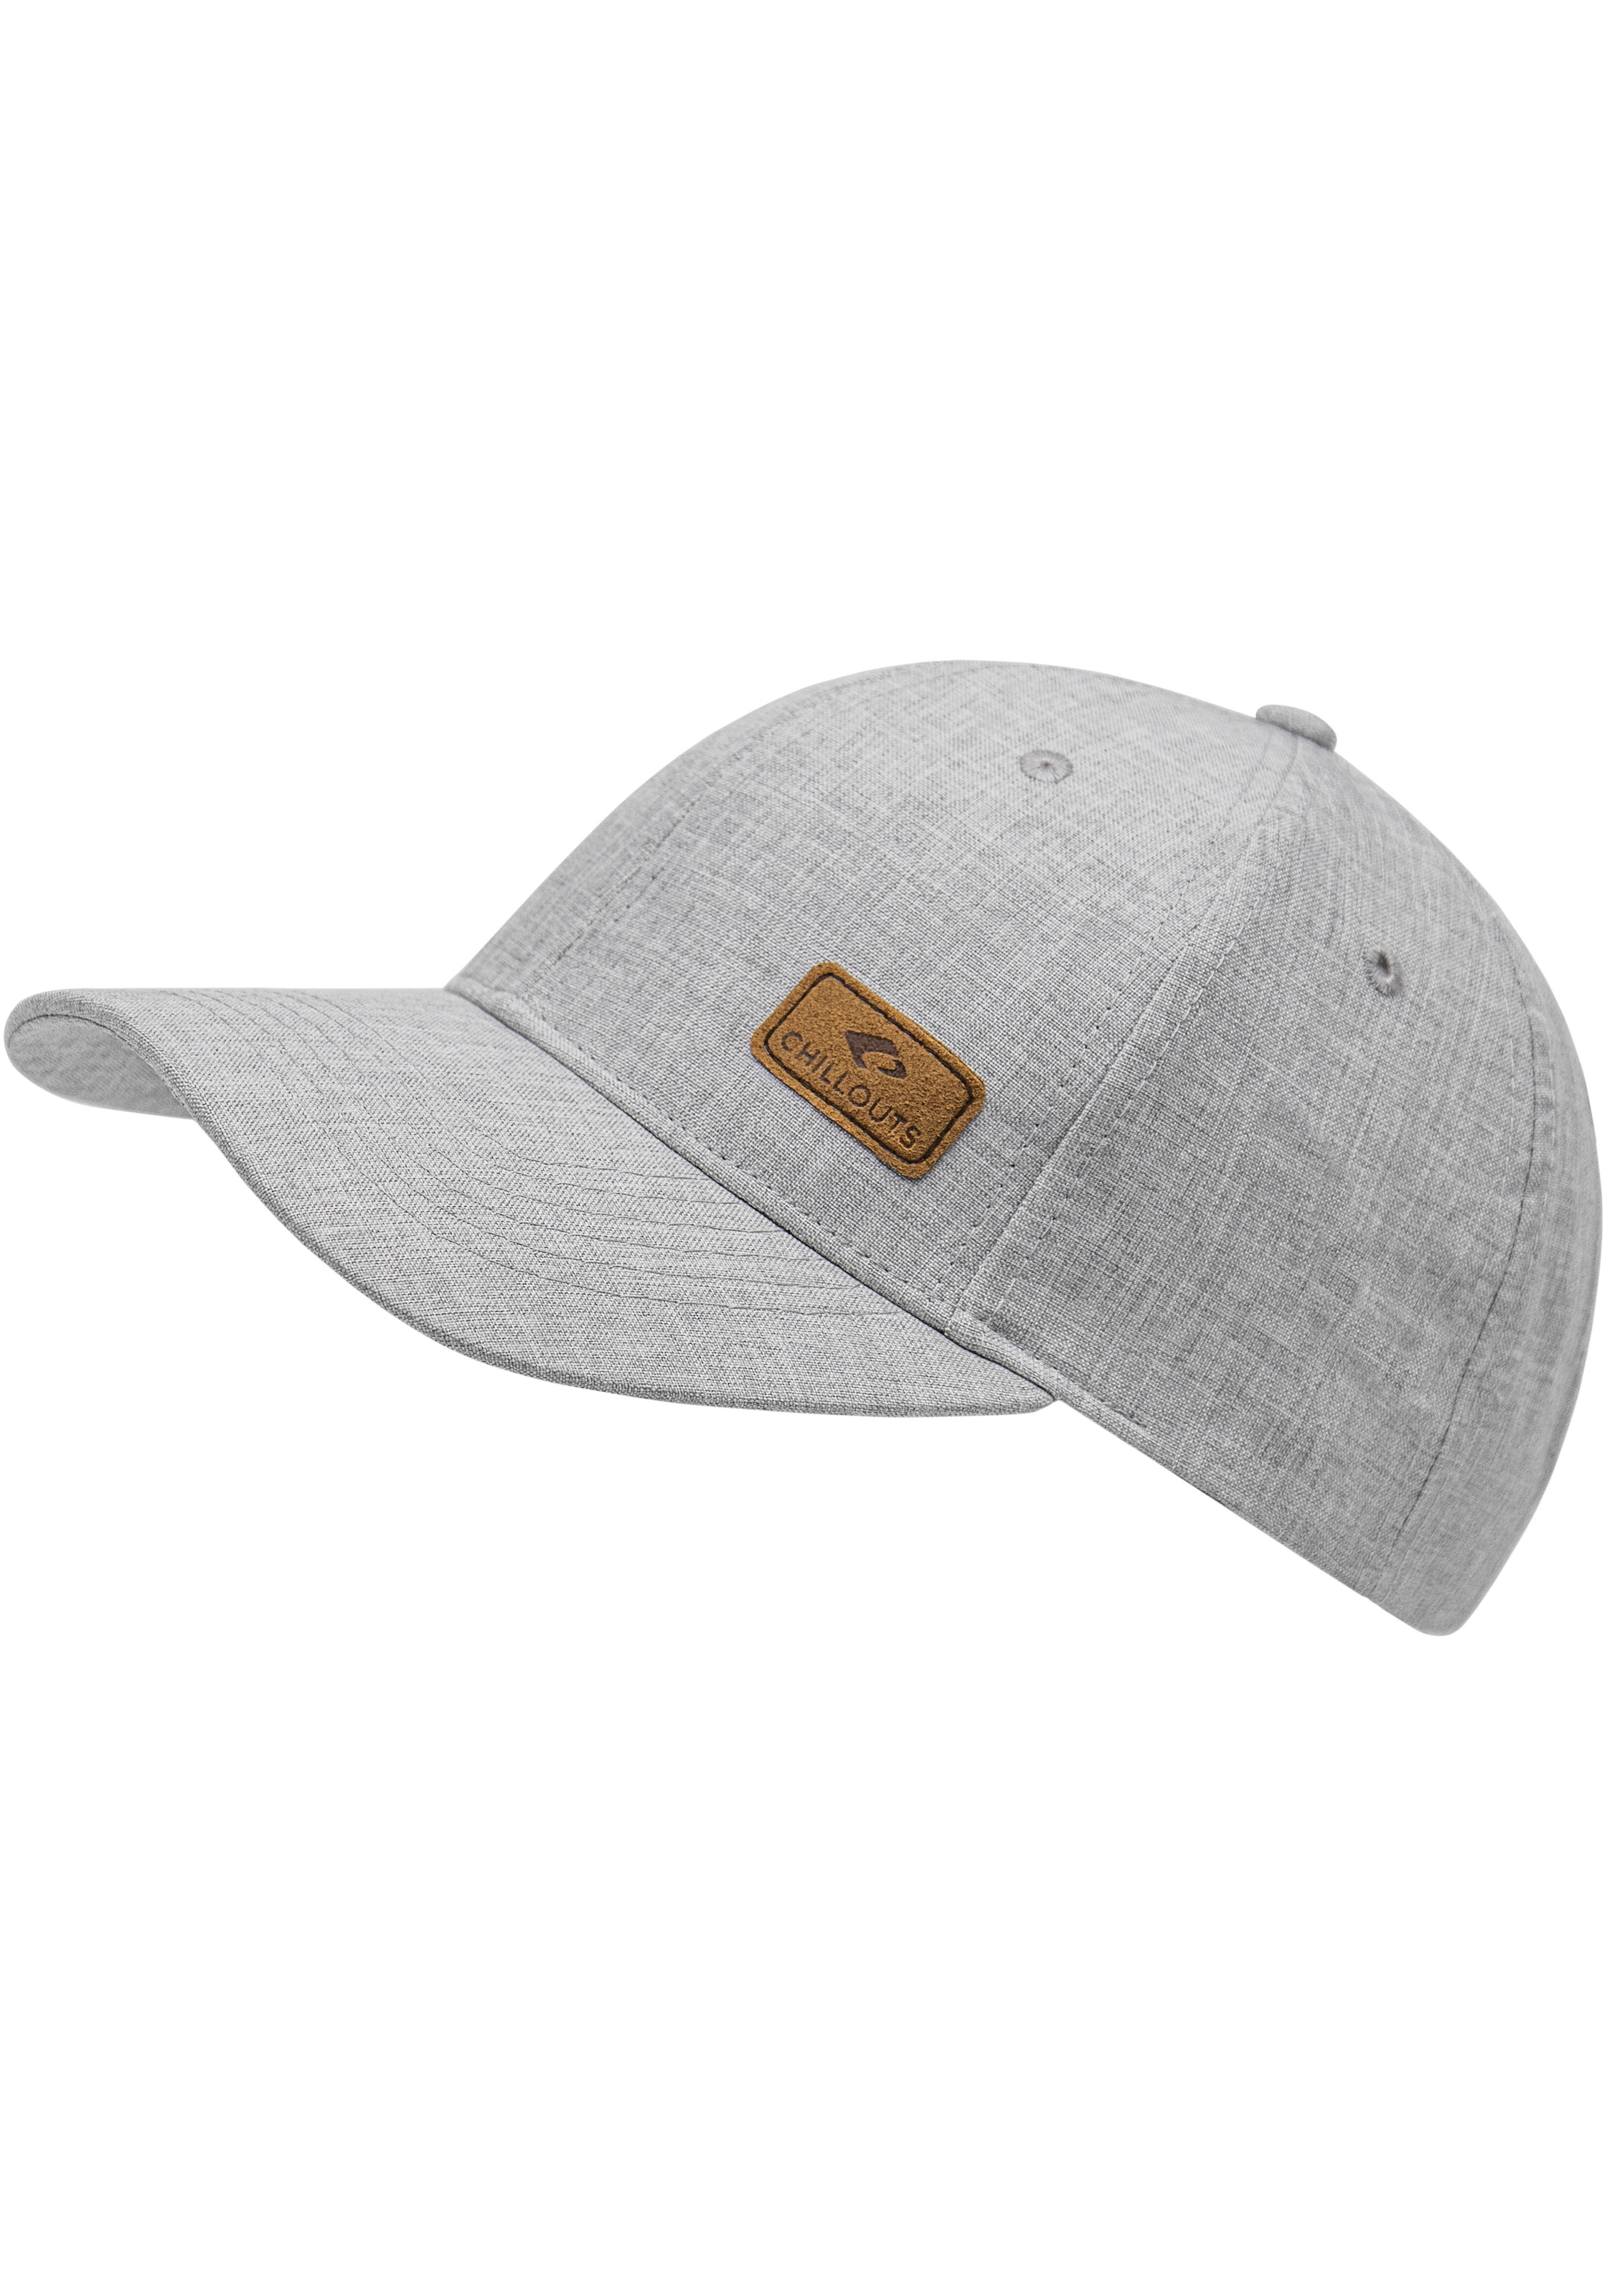 Baseball Cap, Amadora Hat in melierter Optik, One Size, verstellbar